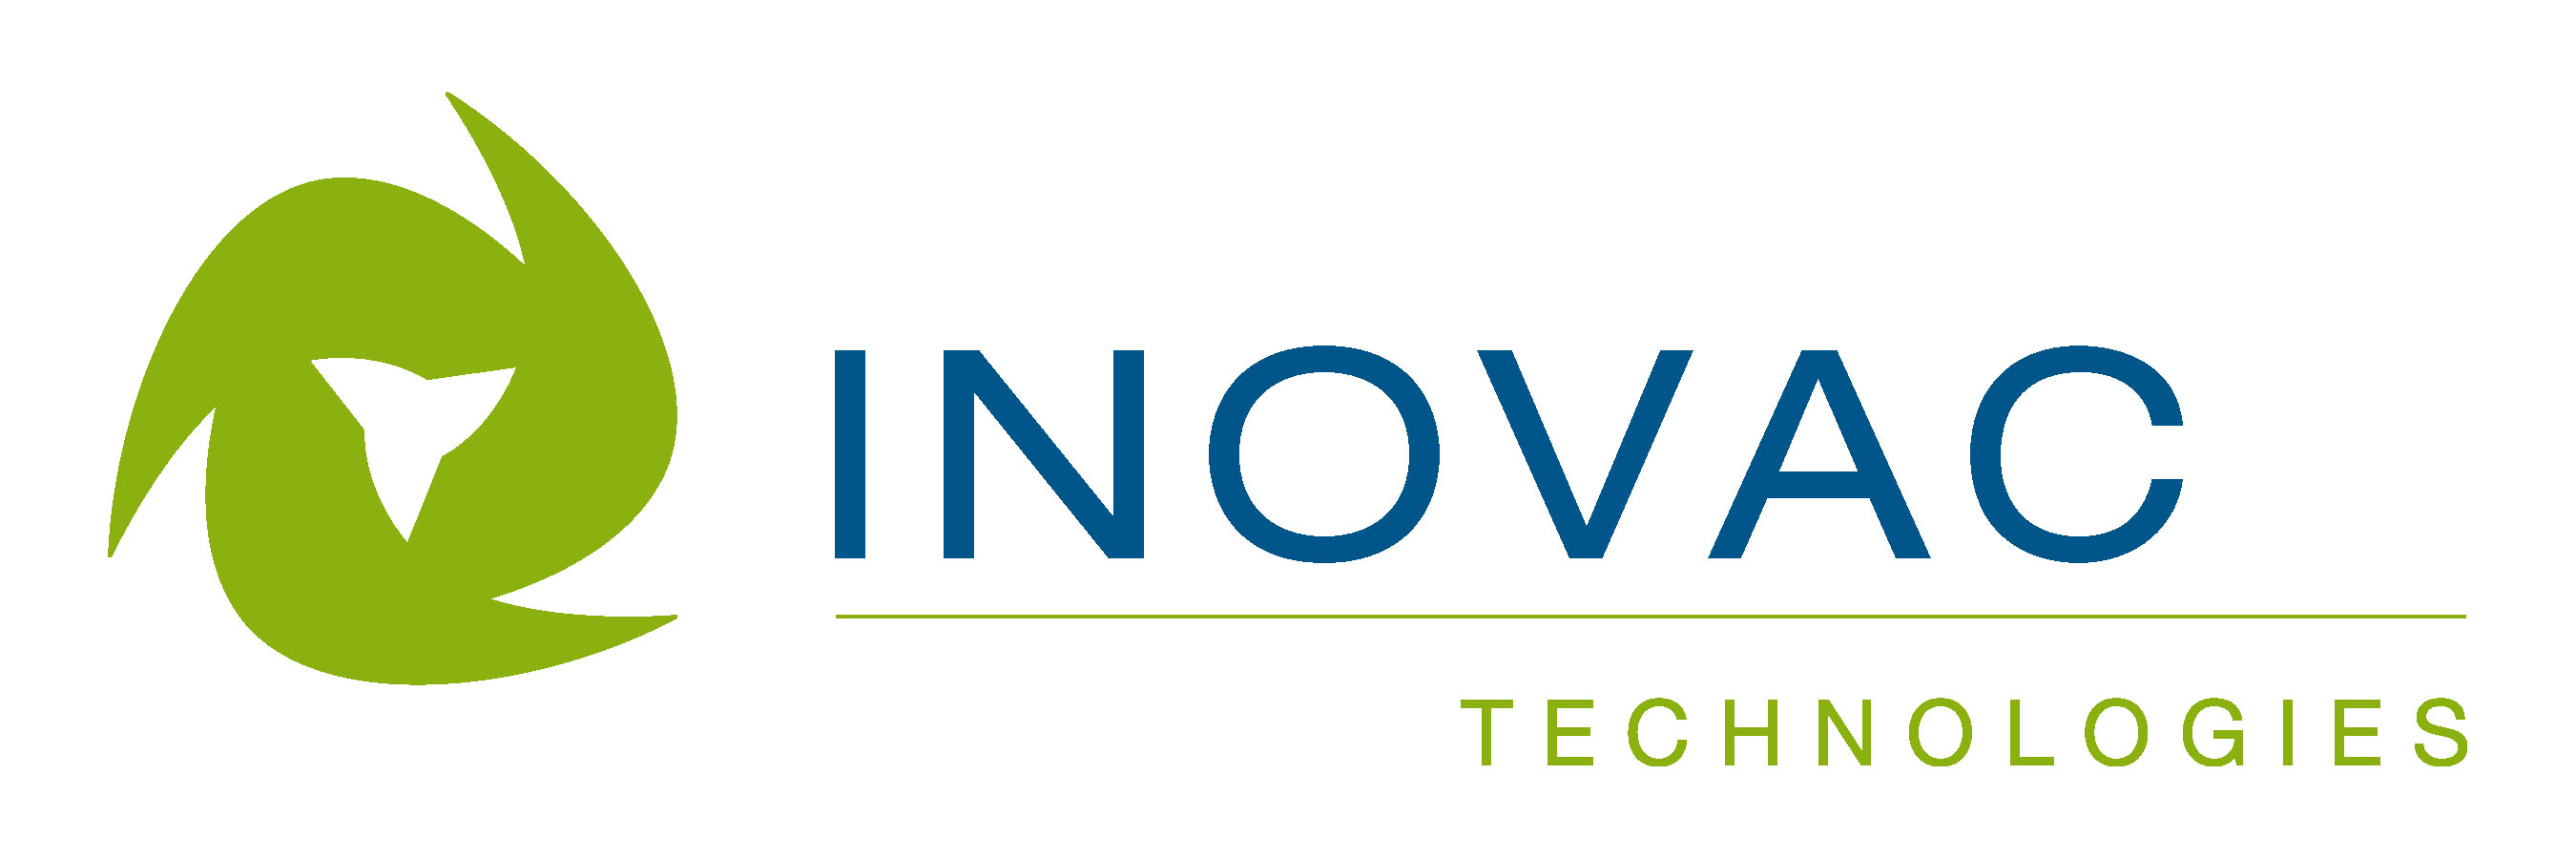 Inovac Technologies - Vacuum trucks